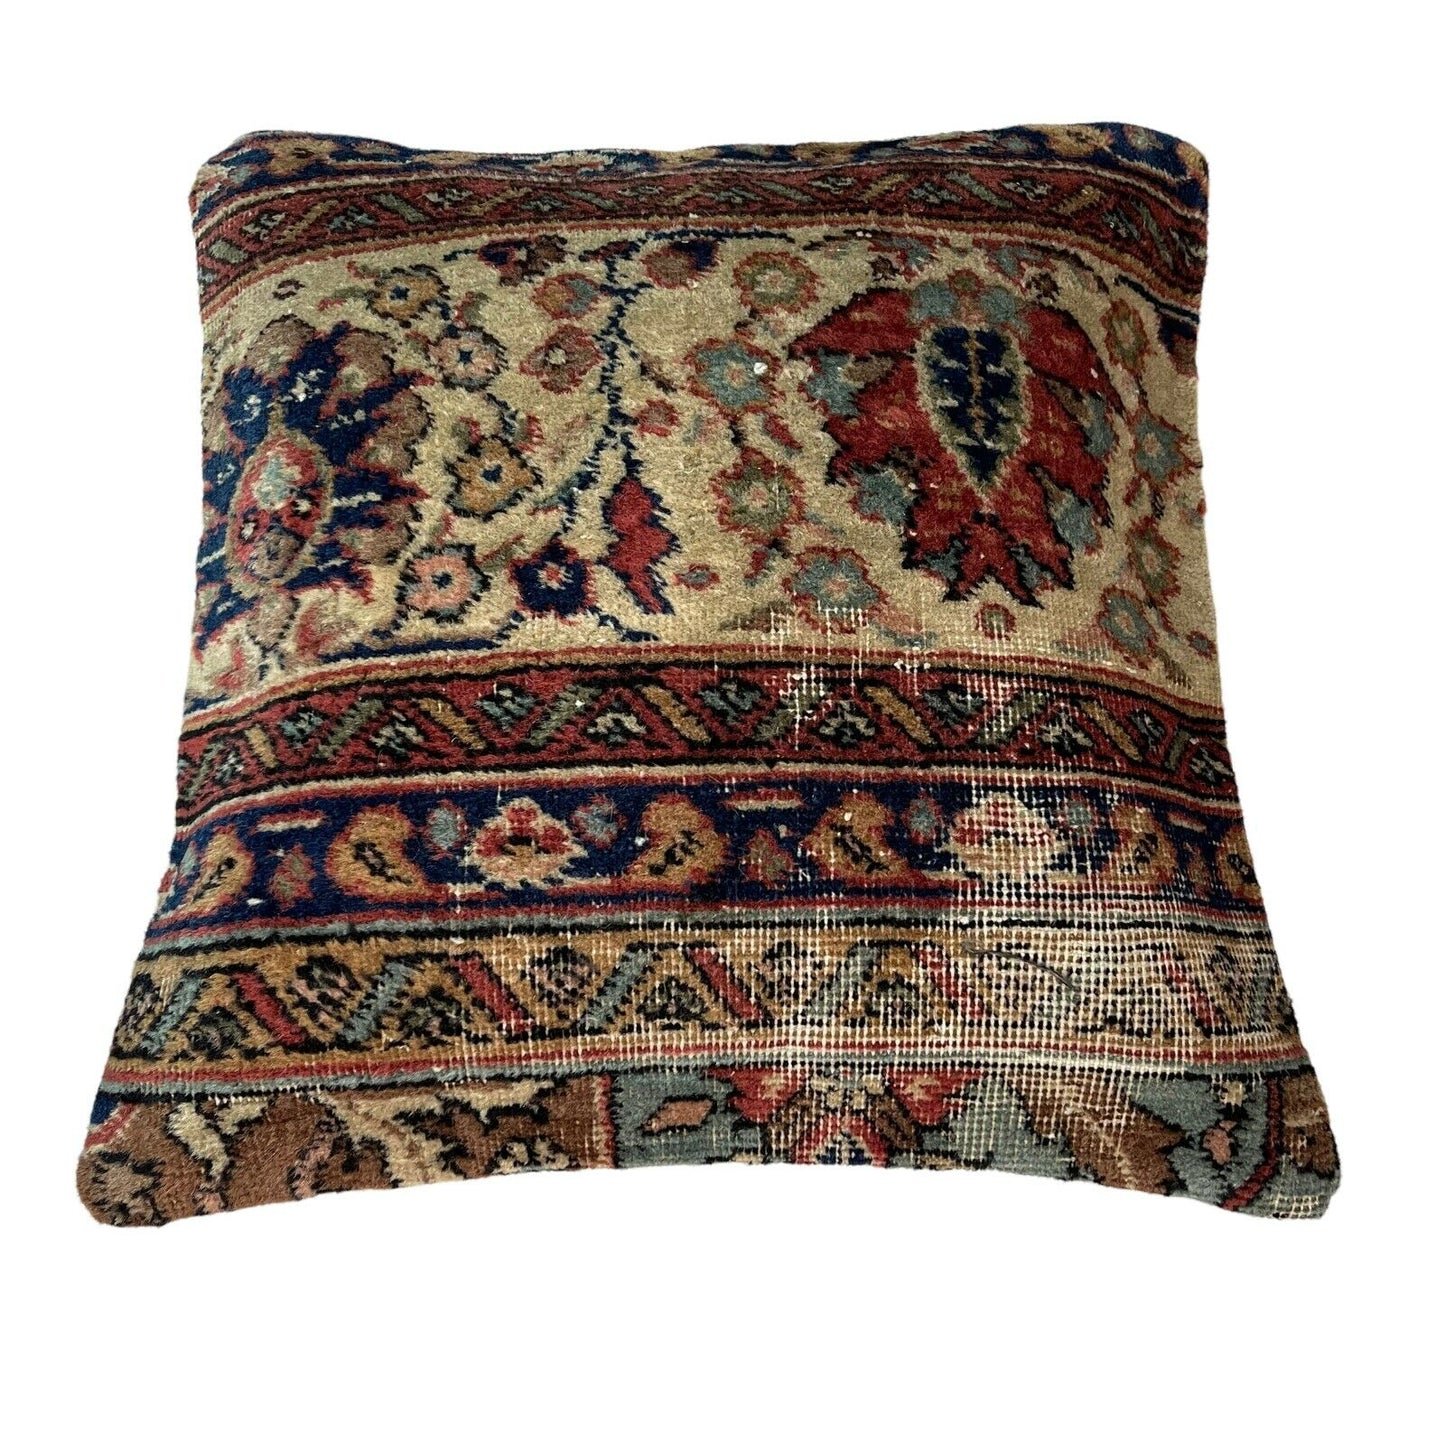 45x45 cm  , Vintage  Kissenbezug , Vintage Turkish  Cushion Cover